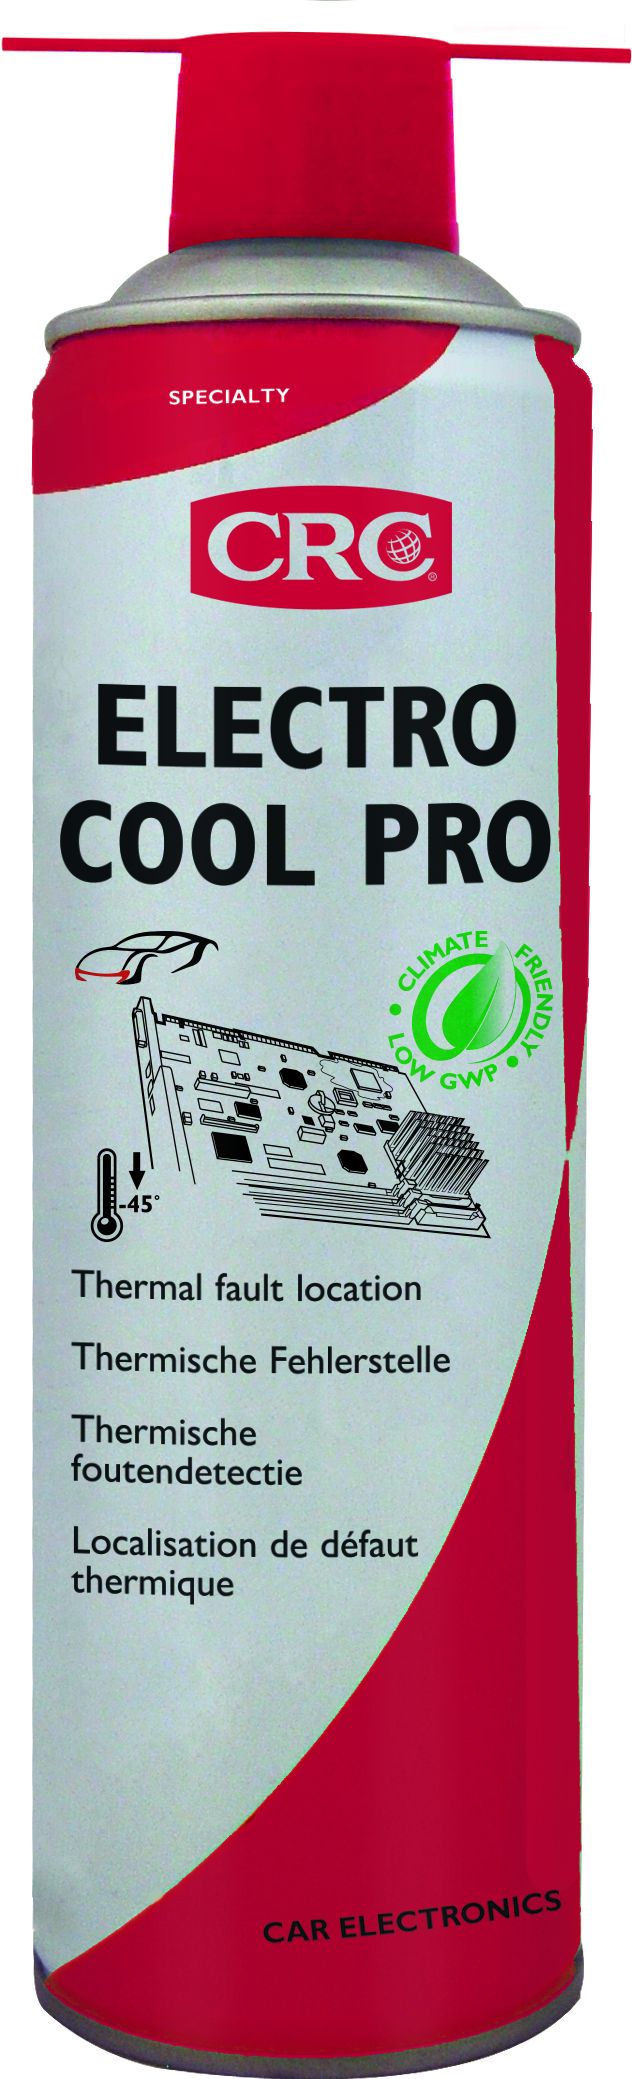 CRC Electro Cool Pro Kylmspray 250 ml